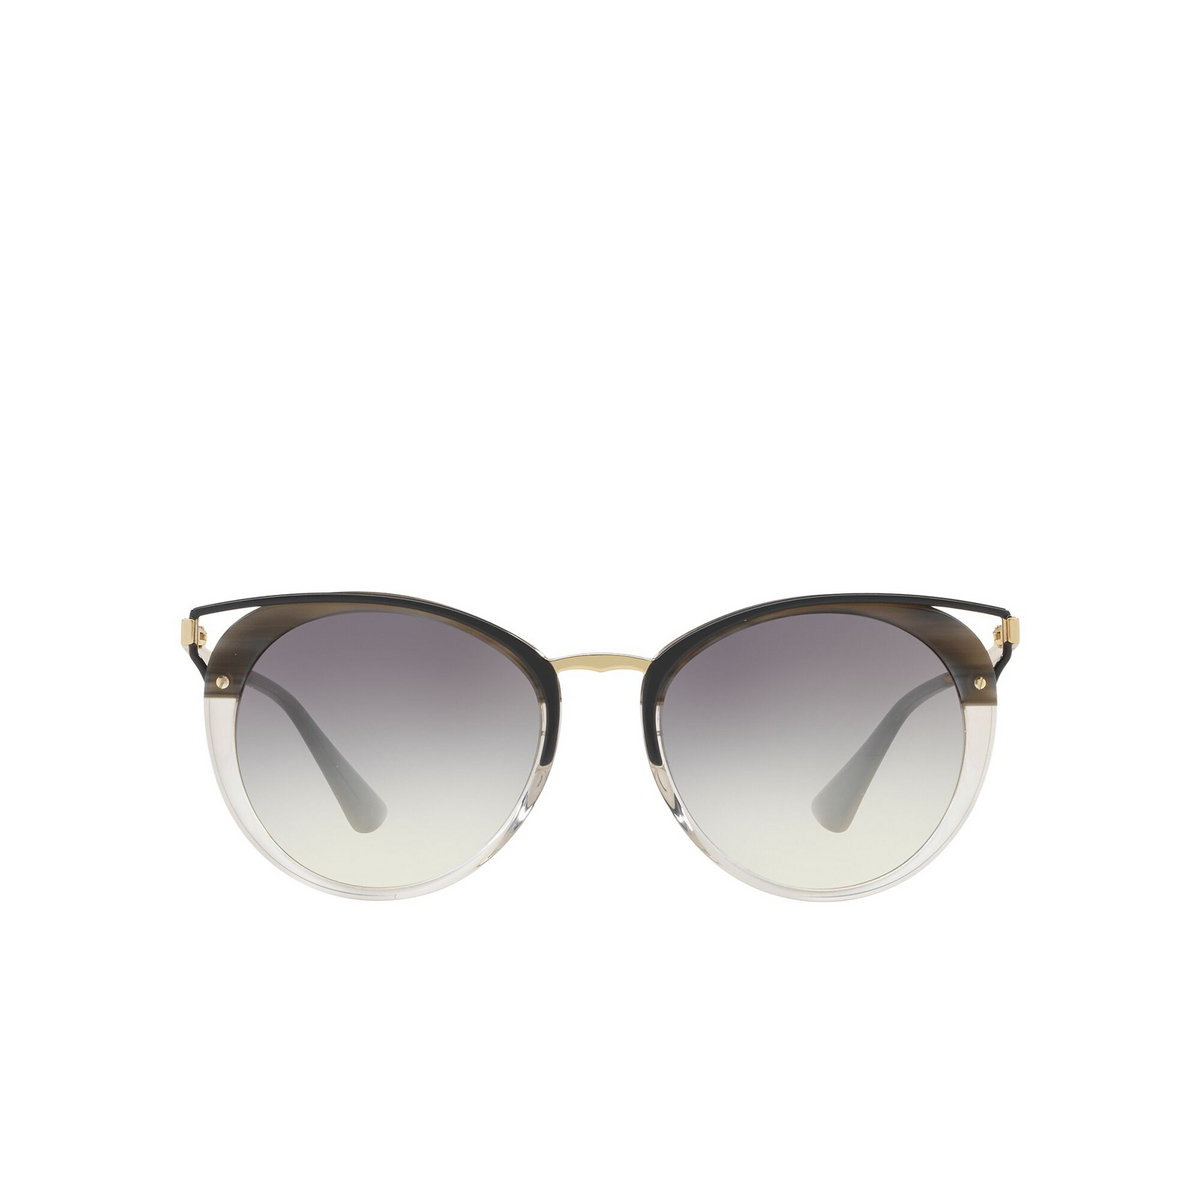 Prada® Cat-eye Sunglasses: PR 66TS color Striped Grey MRU130 - front view.